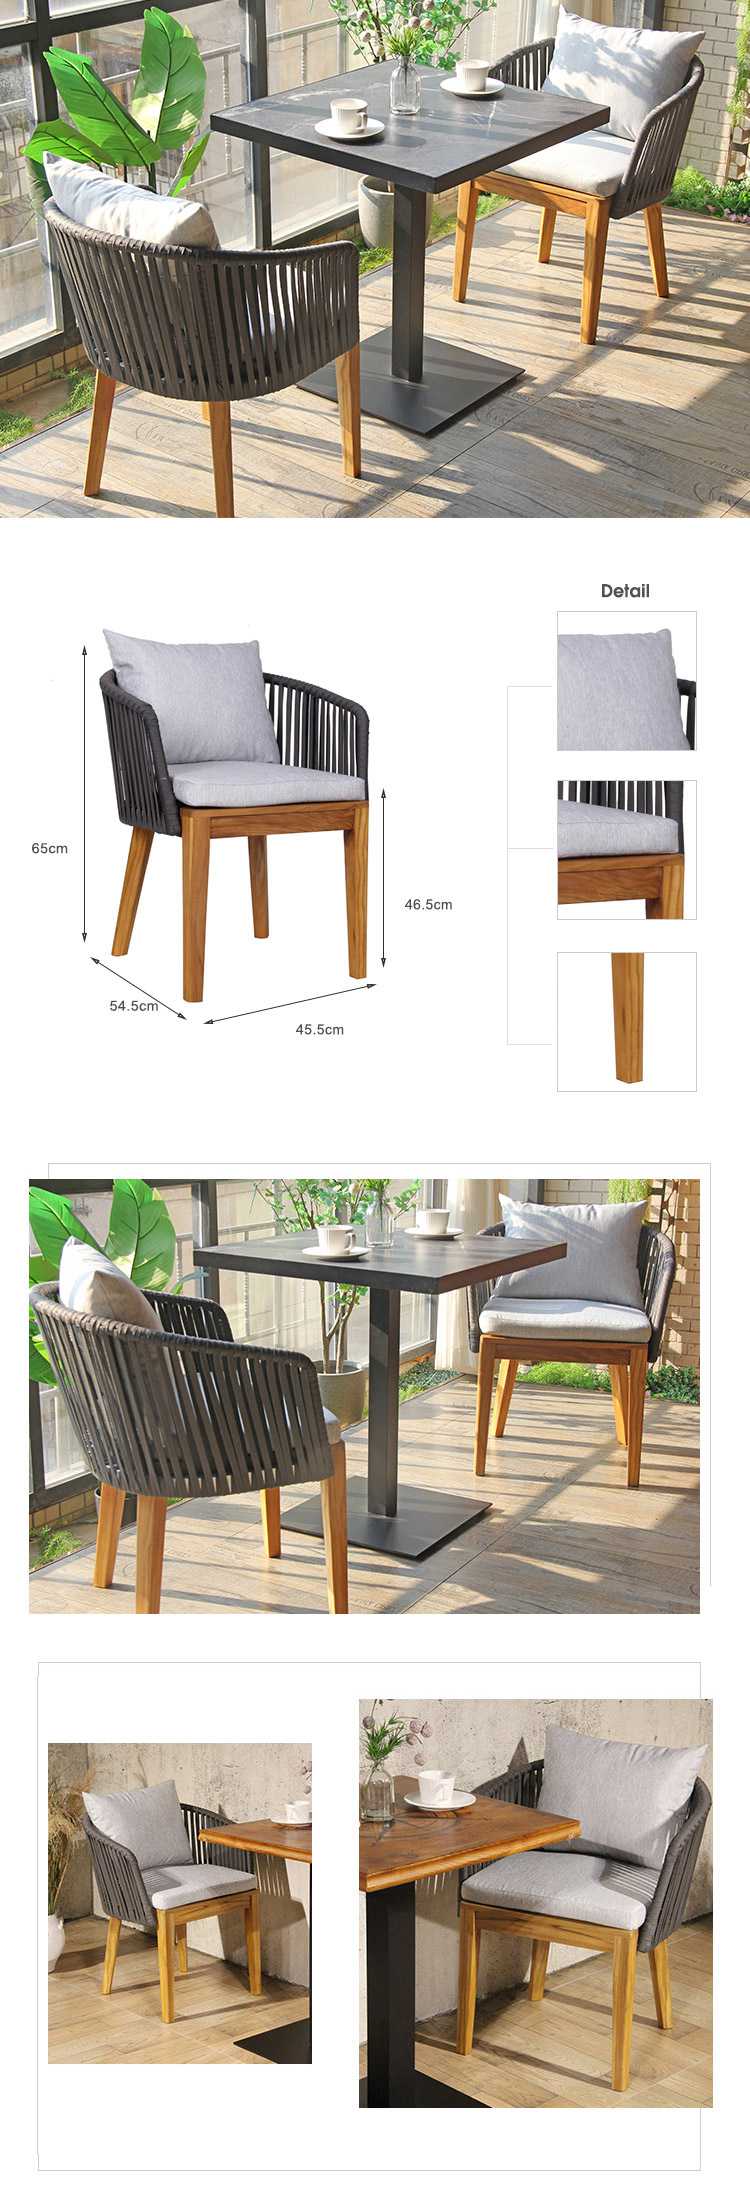 Outdoor Courtyard Chair